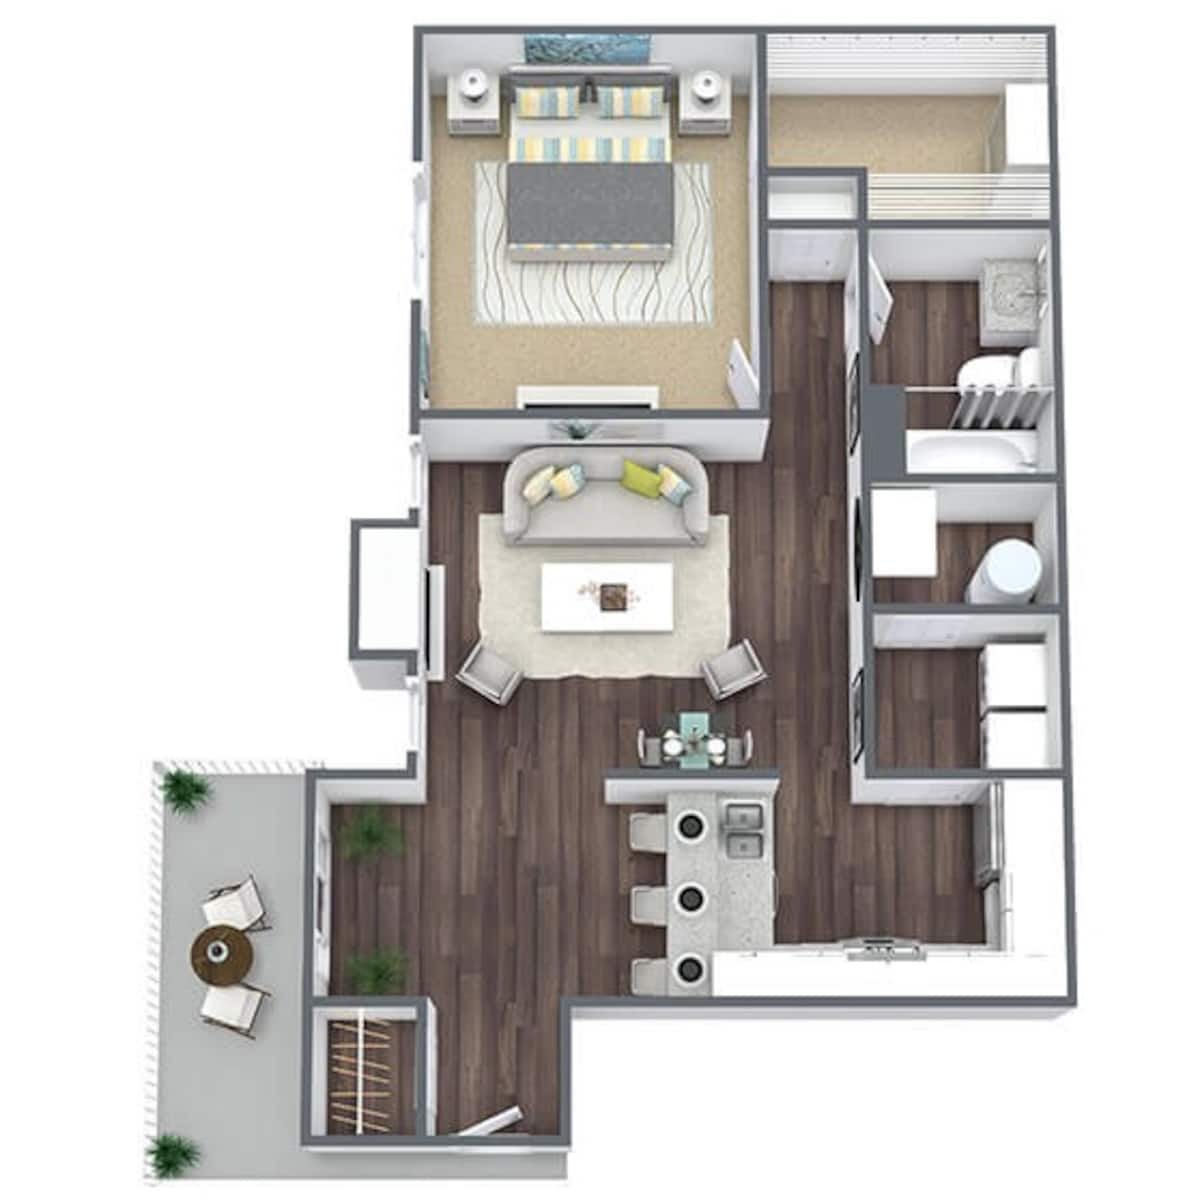 Floorplan diagram for A3 | Birch, showing 1 bedroom